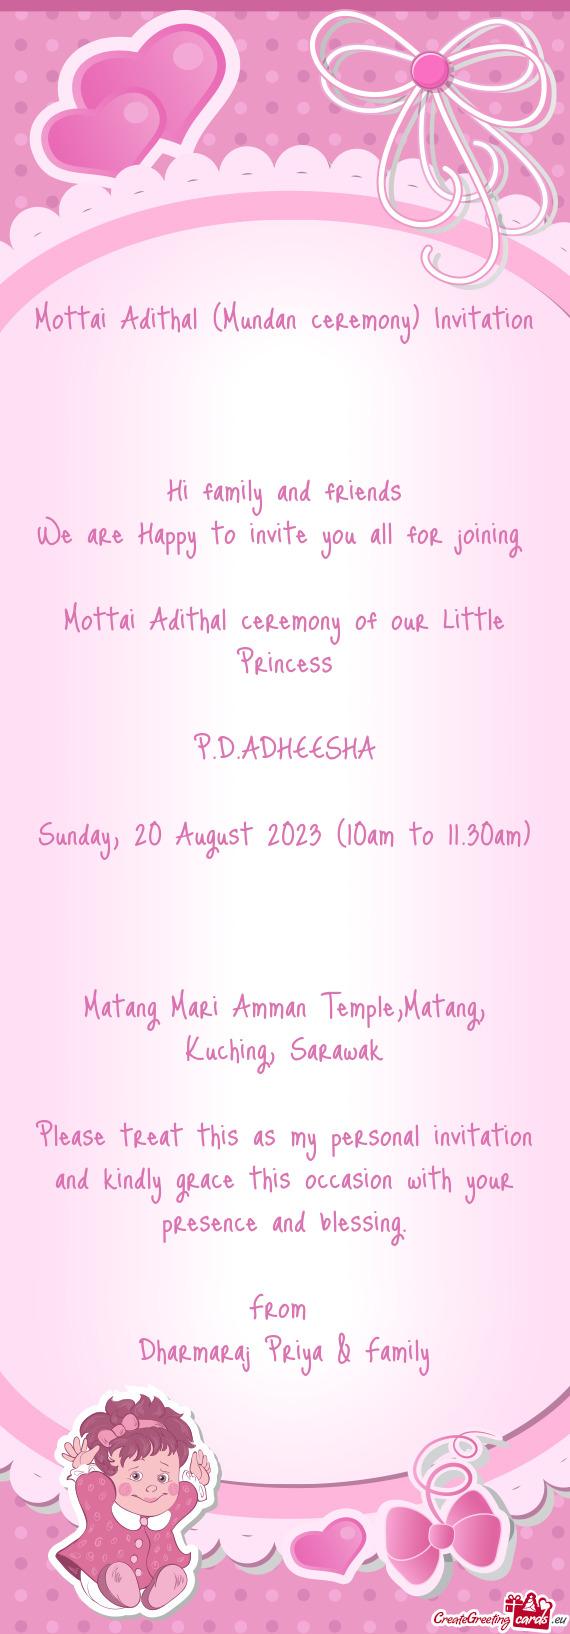 Mottai Adithal (Mundan ceremony) Invitation